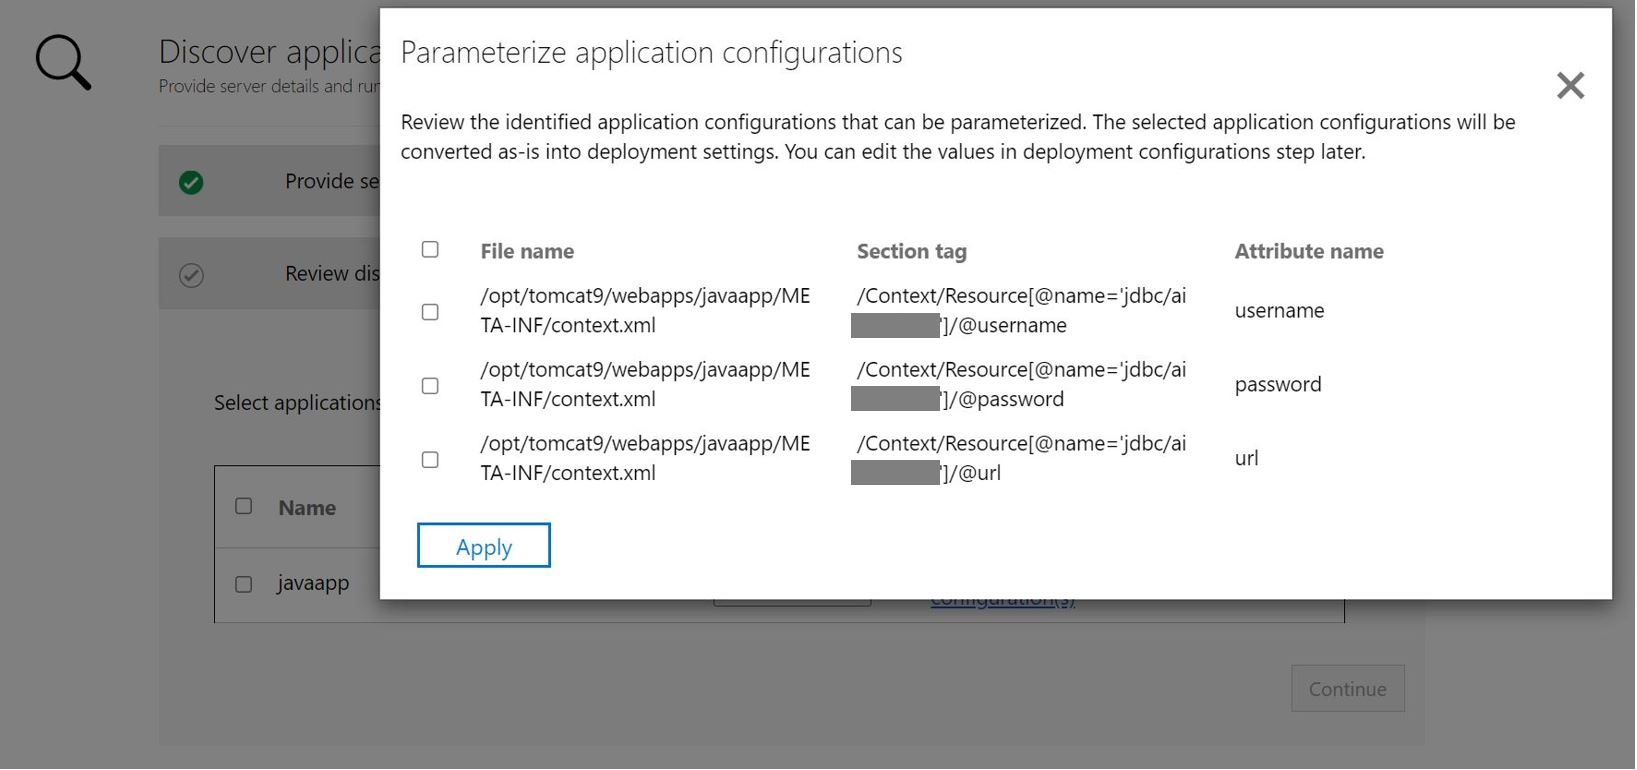 Снимок экрана: параметризация конфигураций приложения Java.